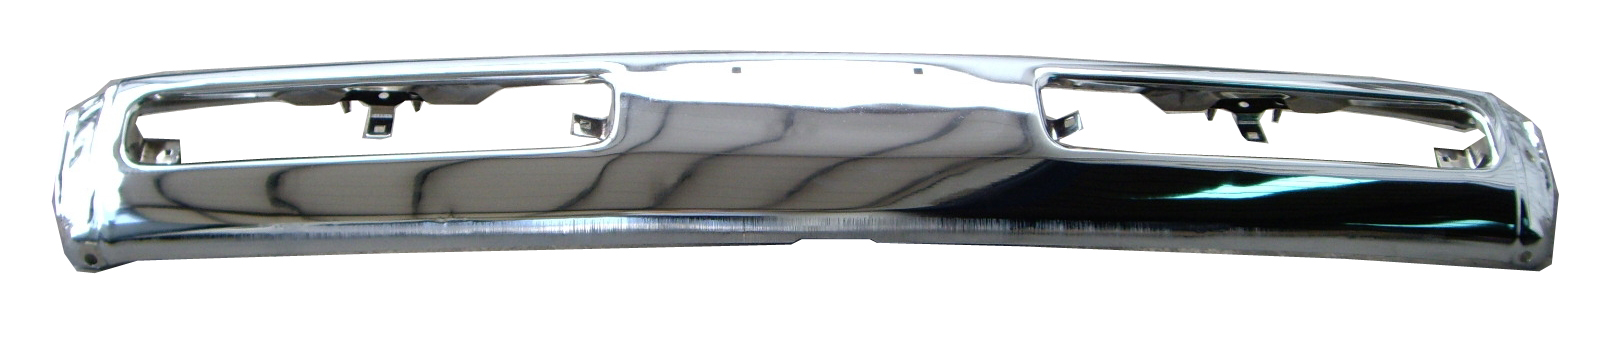 Aftermarket METAL FRONT BUMPERS for NISSAN - PICKUP, PICKUP,95-96,Front bumper face bar